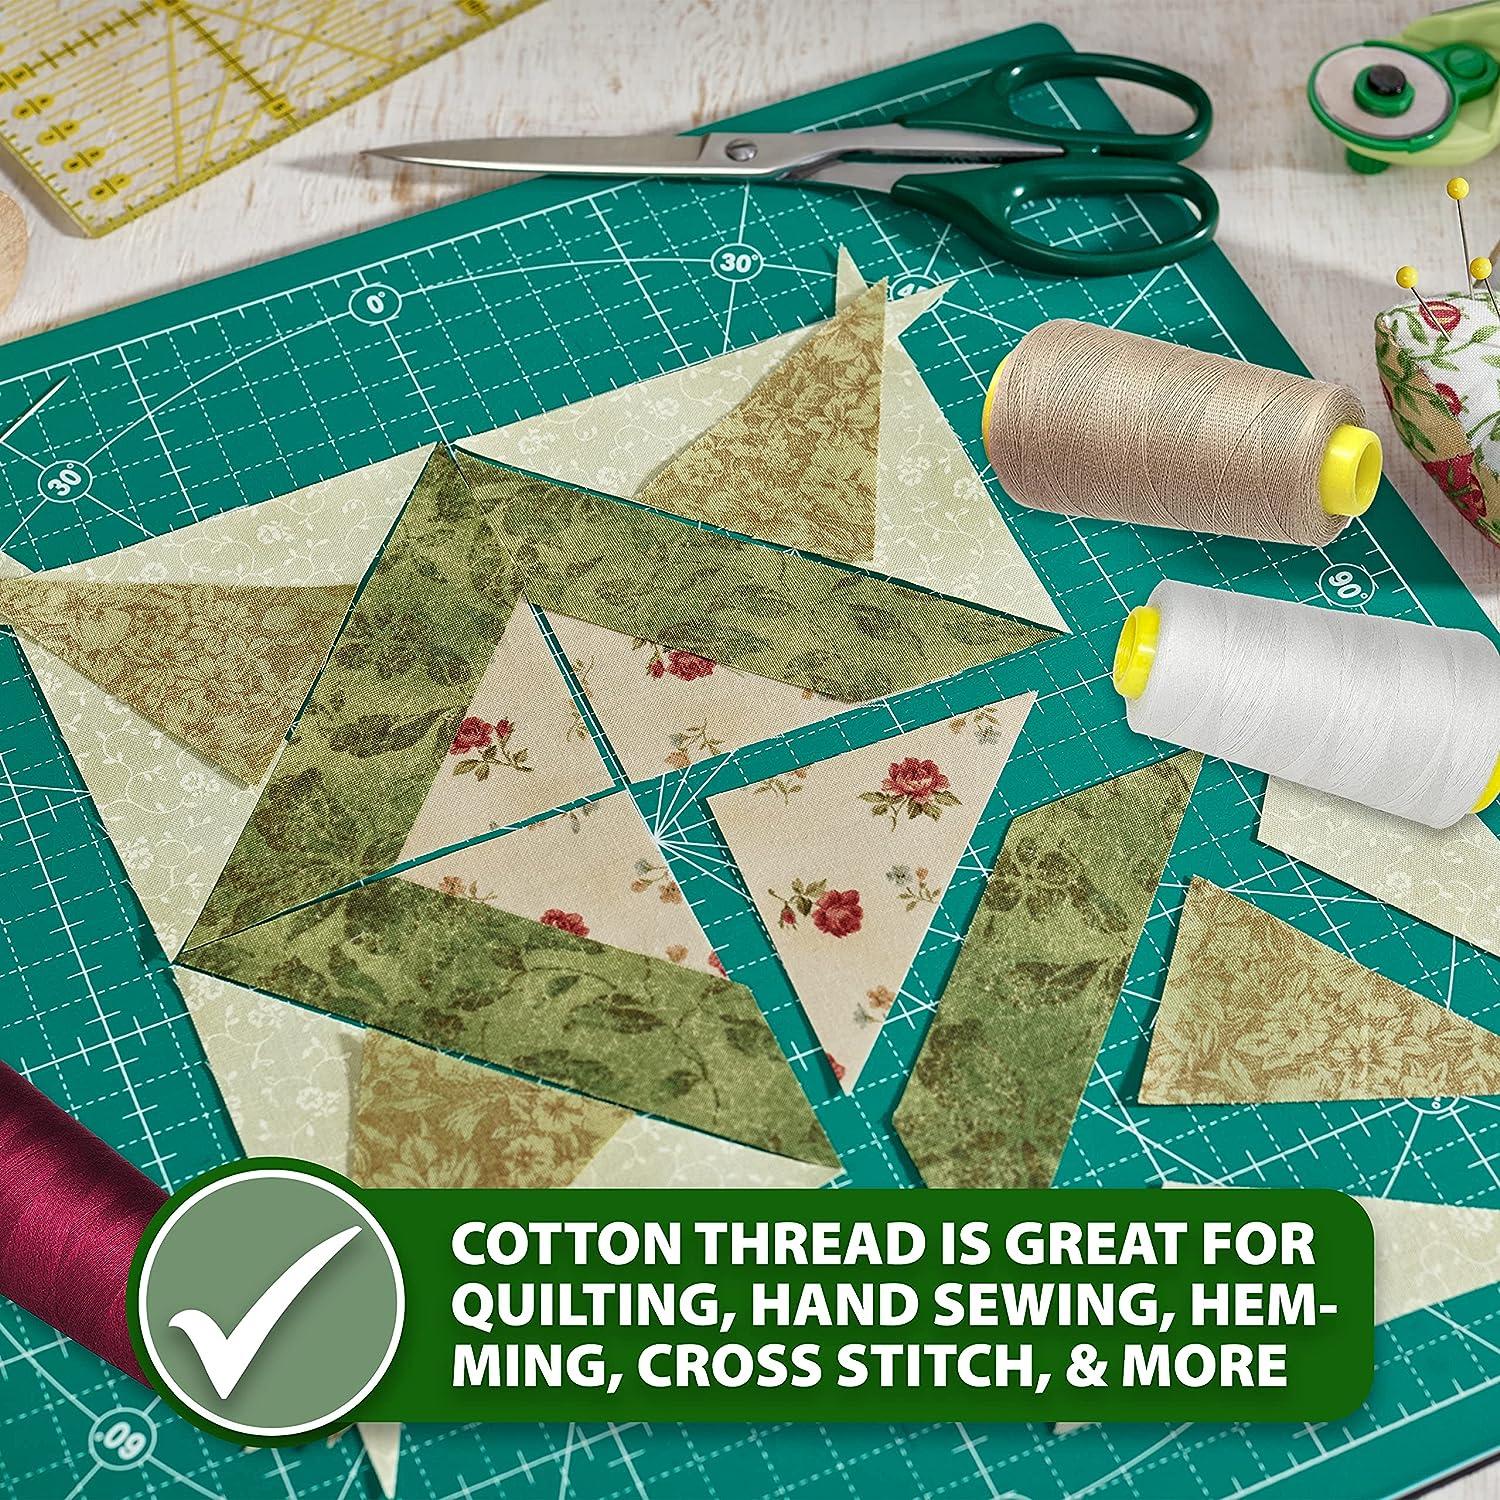  Mandala Crafts Mercerized Cotton Thread for Sewing